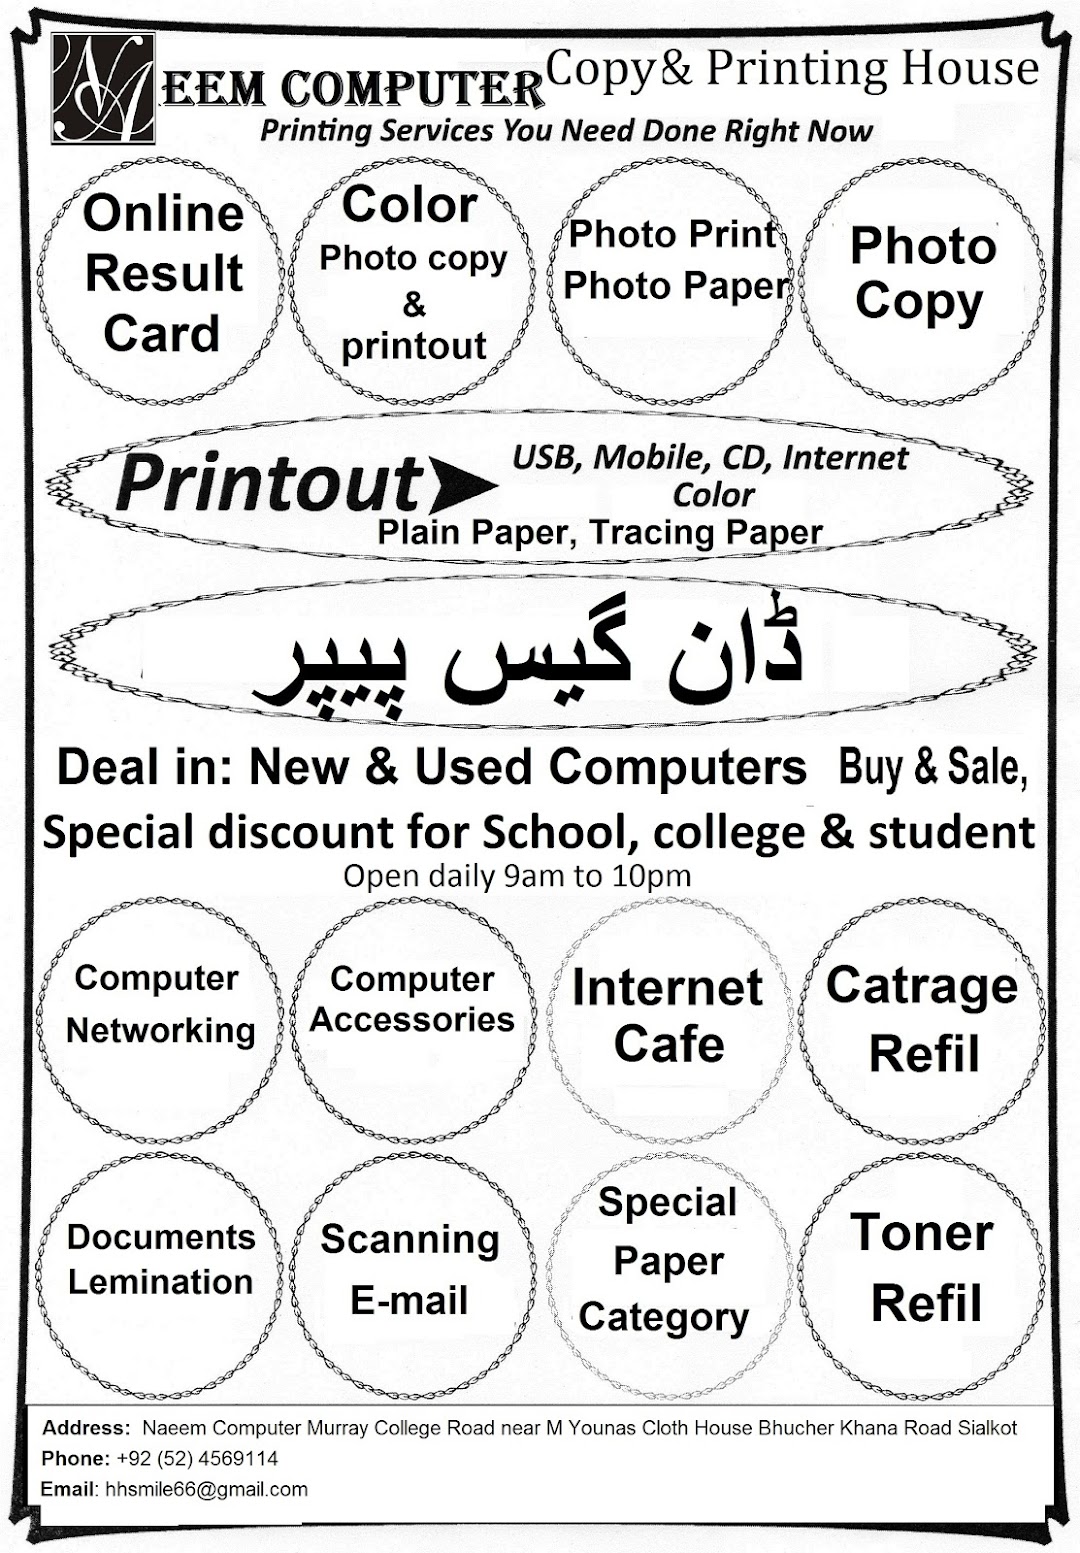 Naeem computer & photo copy